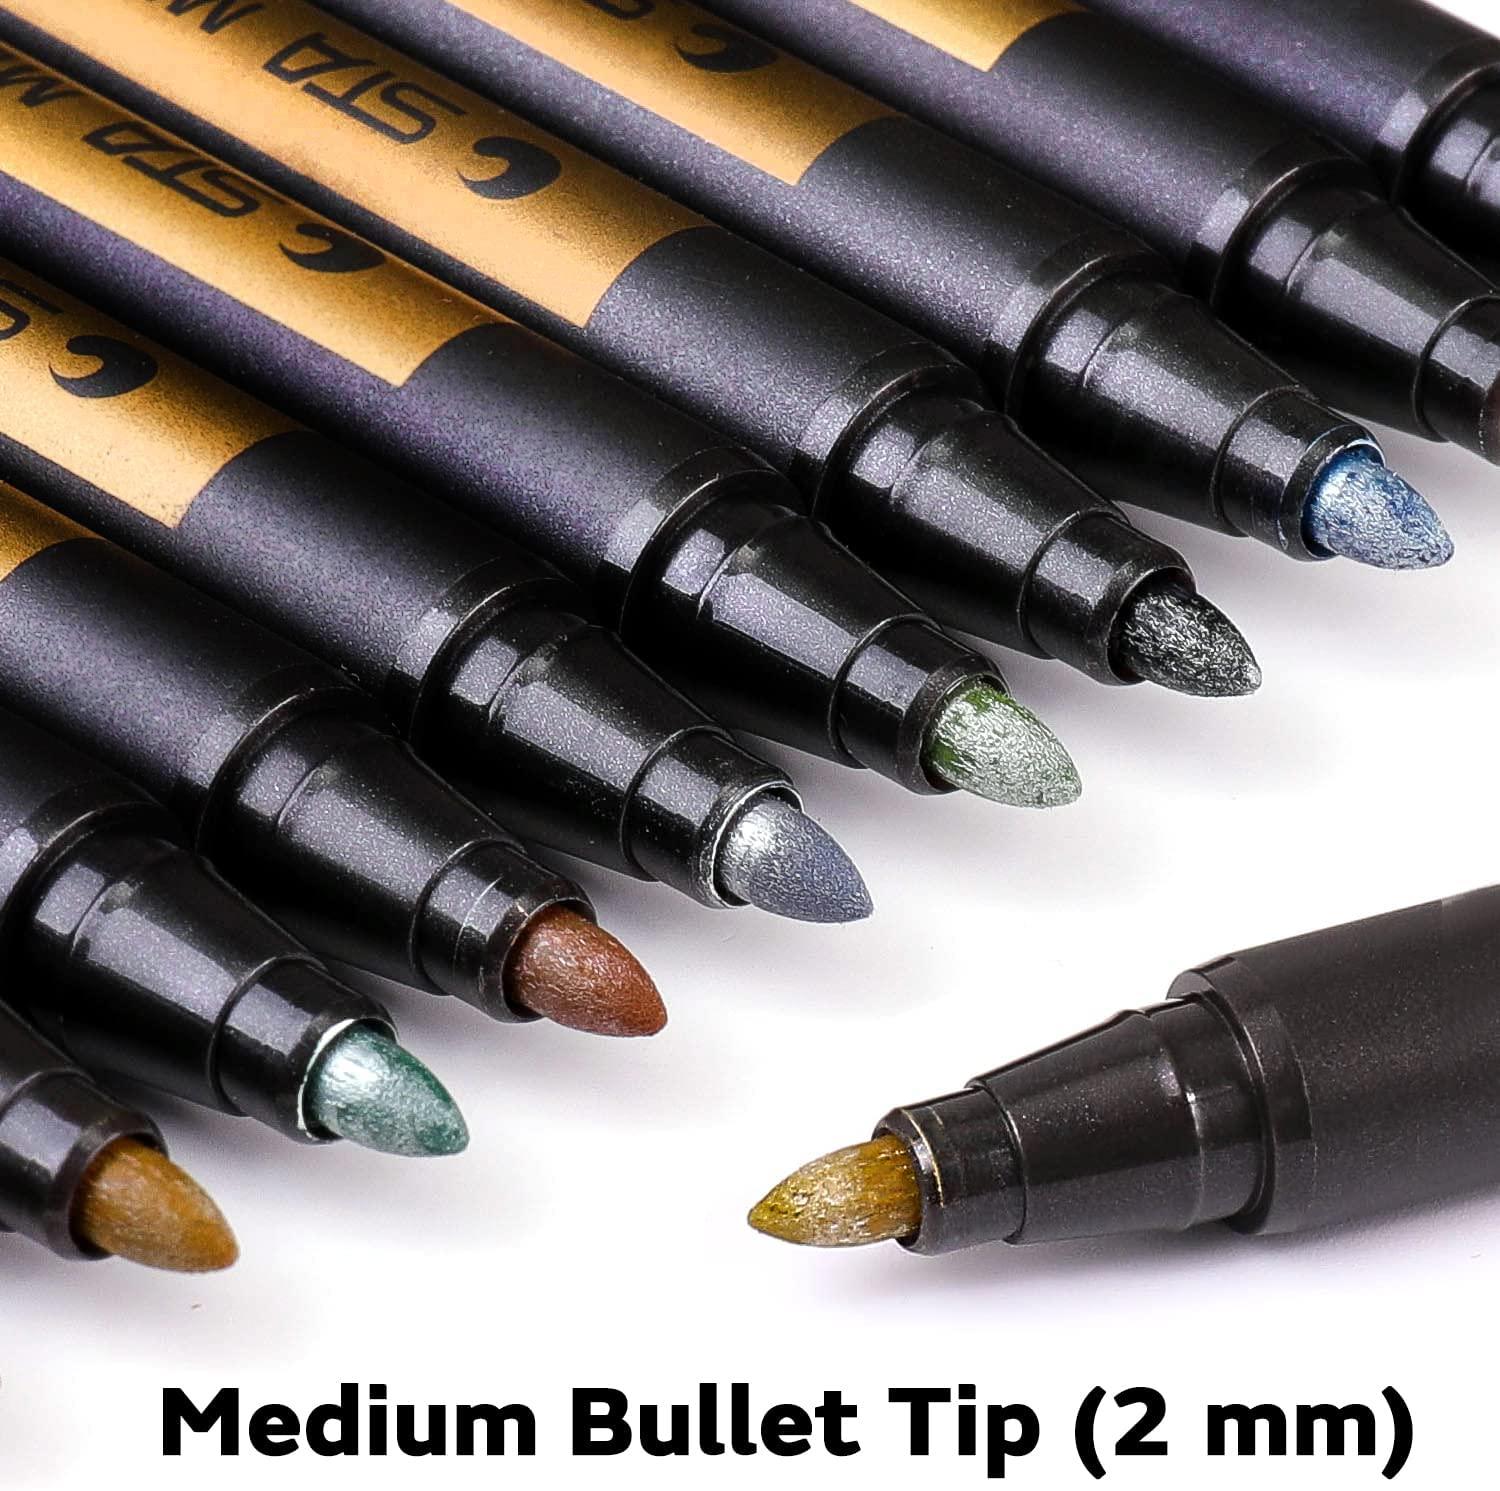 Dyvicl Metallic Marker Pens - Set of 10 Medium Point Metallic